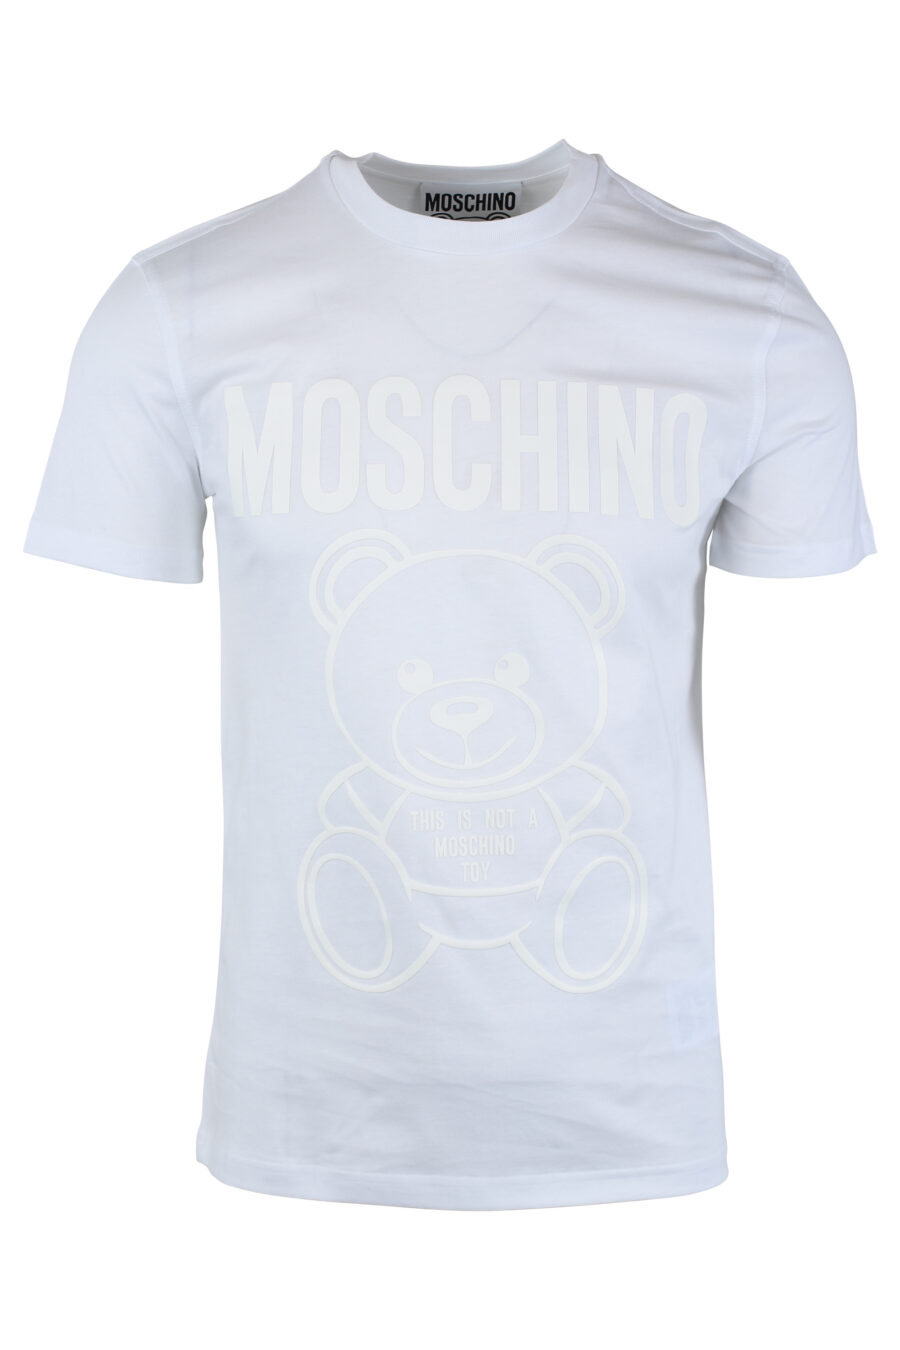 T-shirt blanc avec ours monochrome maxilogo - IMG 1657